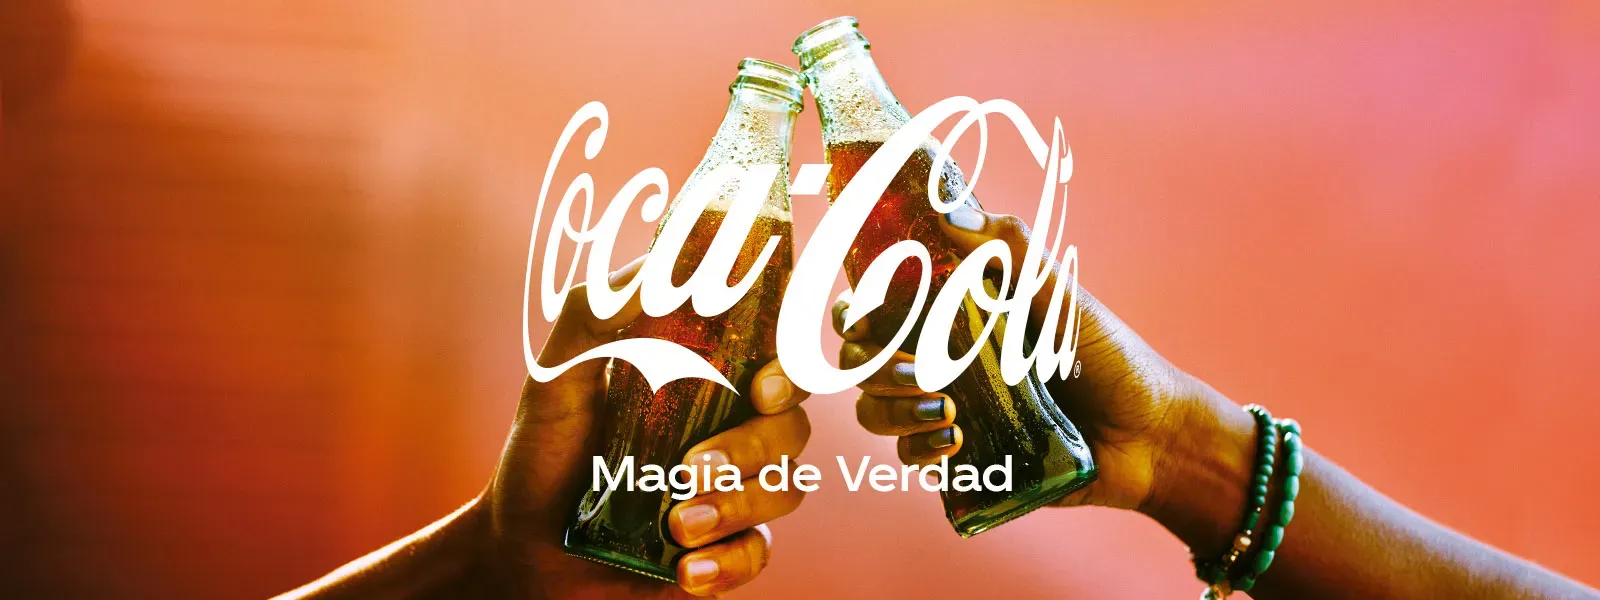 Coca-Cola Magia de verdad